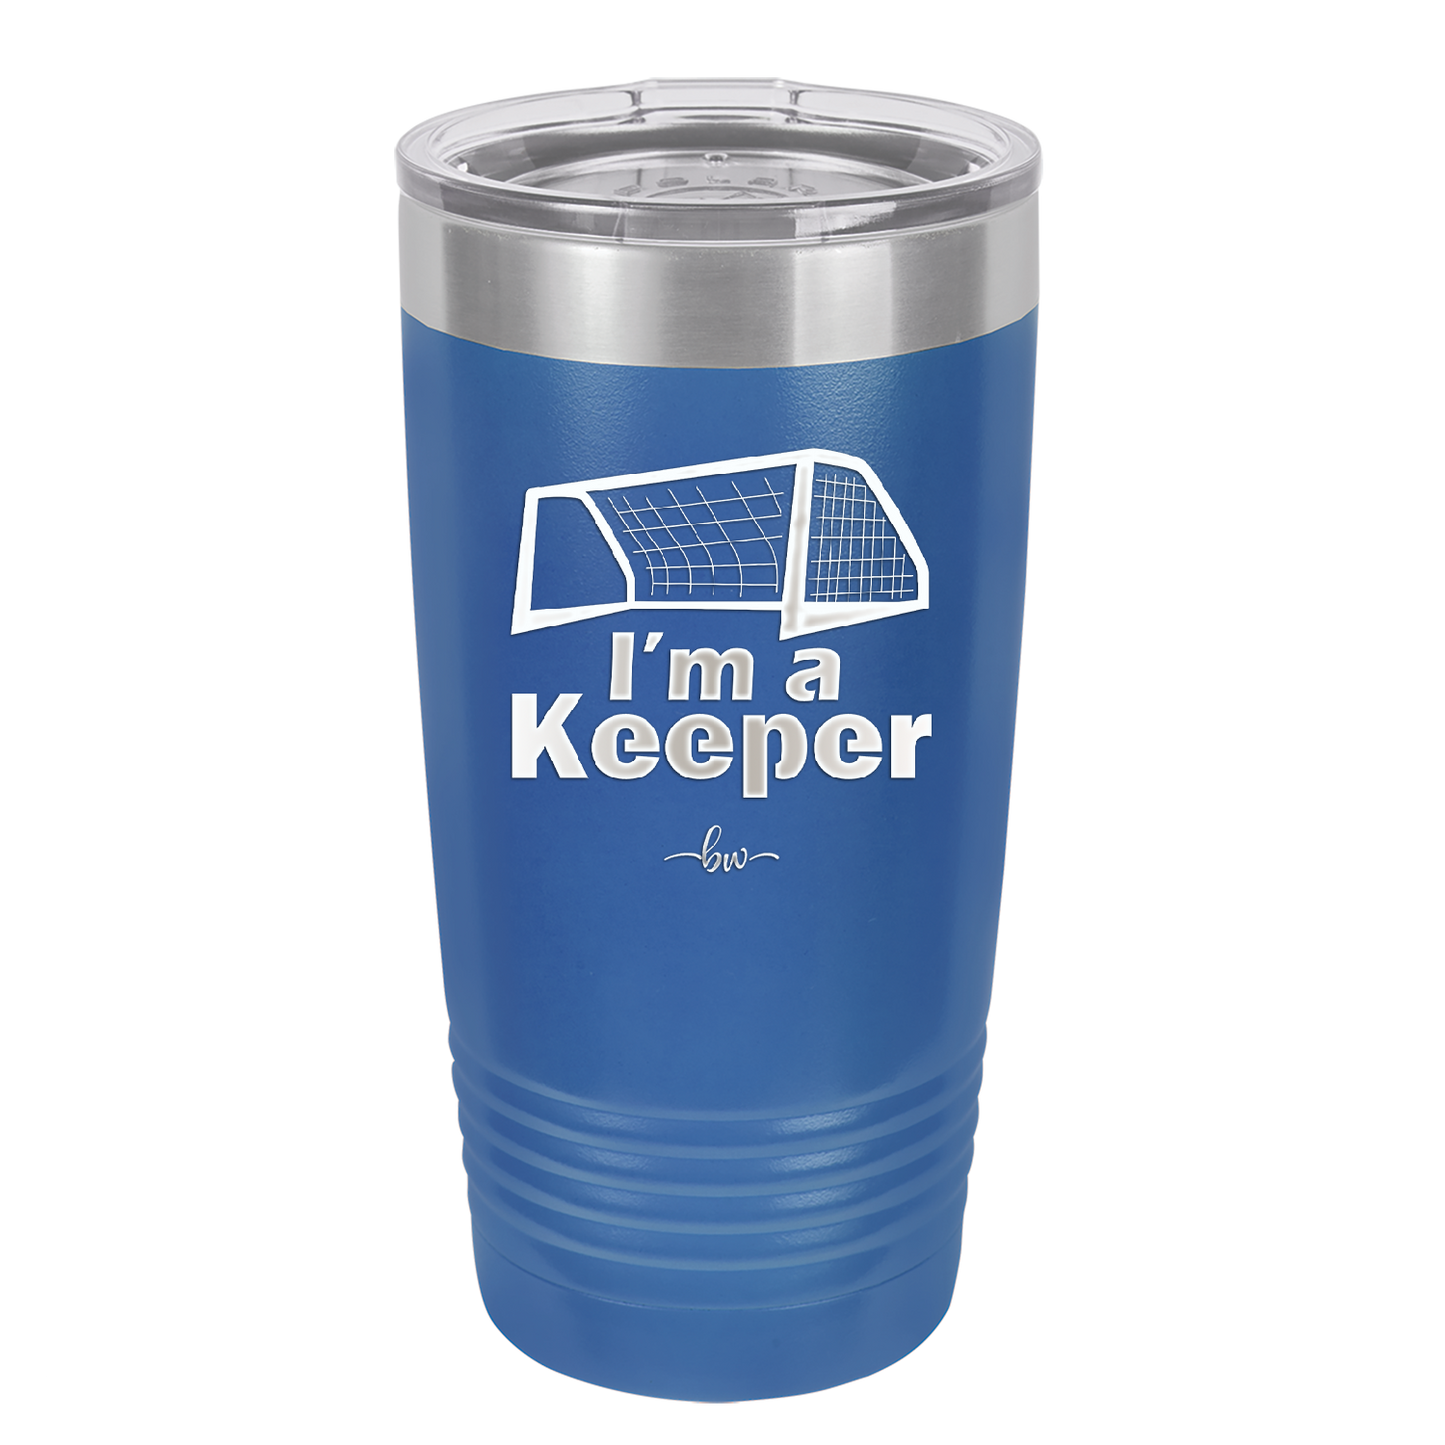 I'm a Keeper Goalie - Laser Engraved Stainless Steel Drinkware - 1910 -